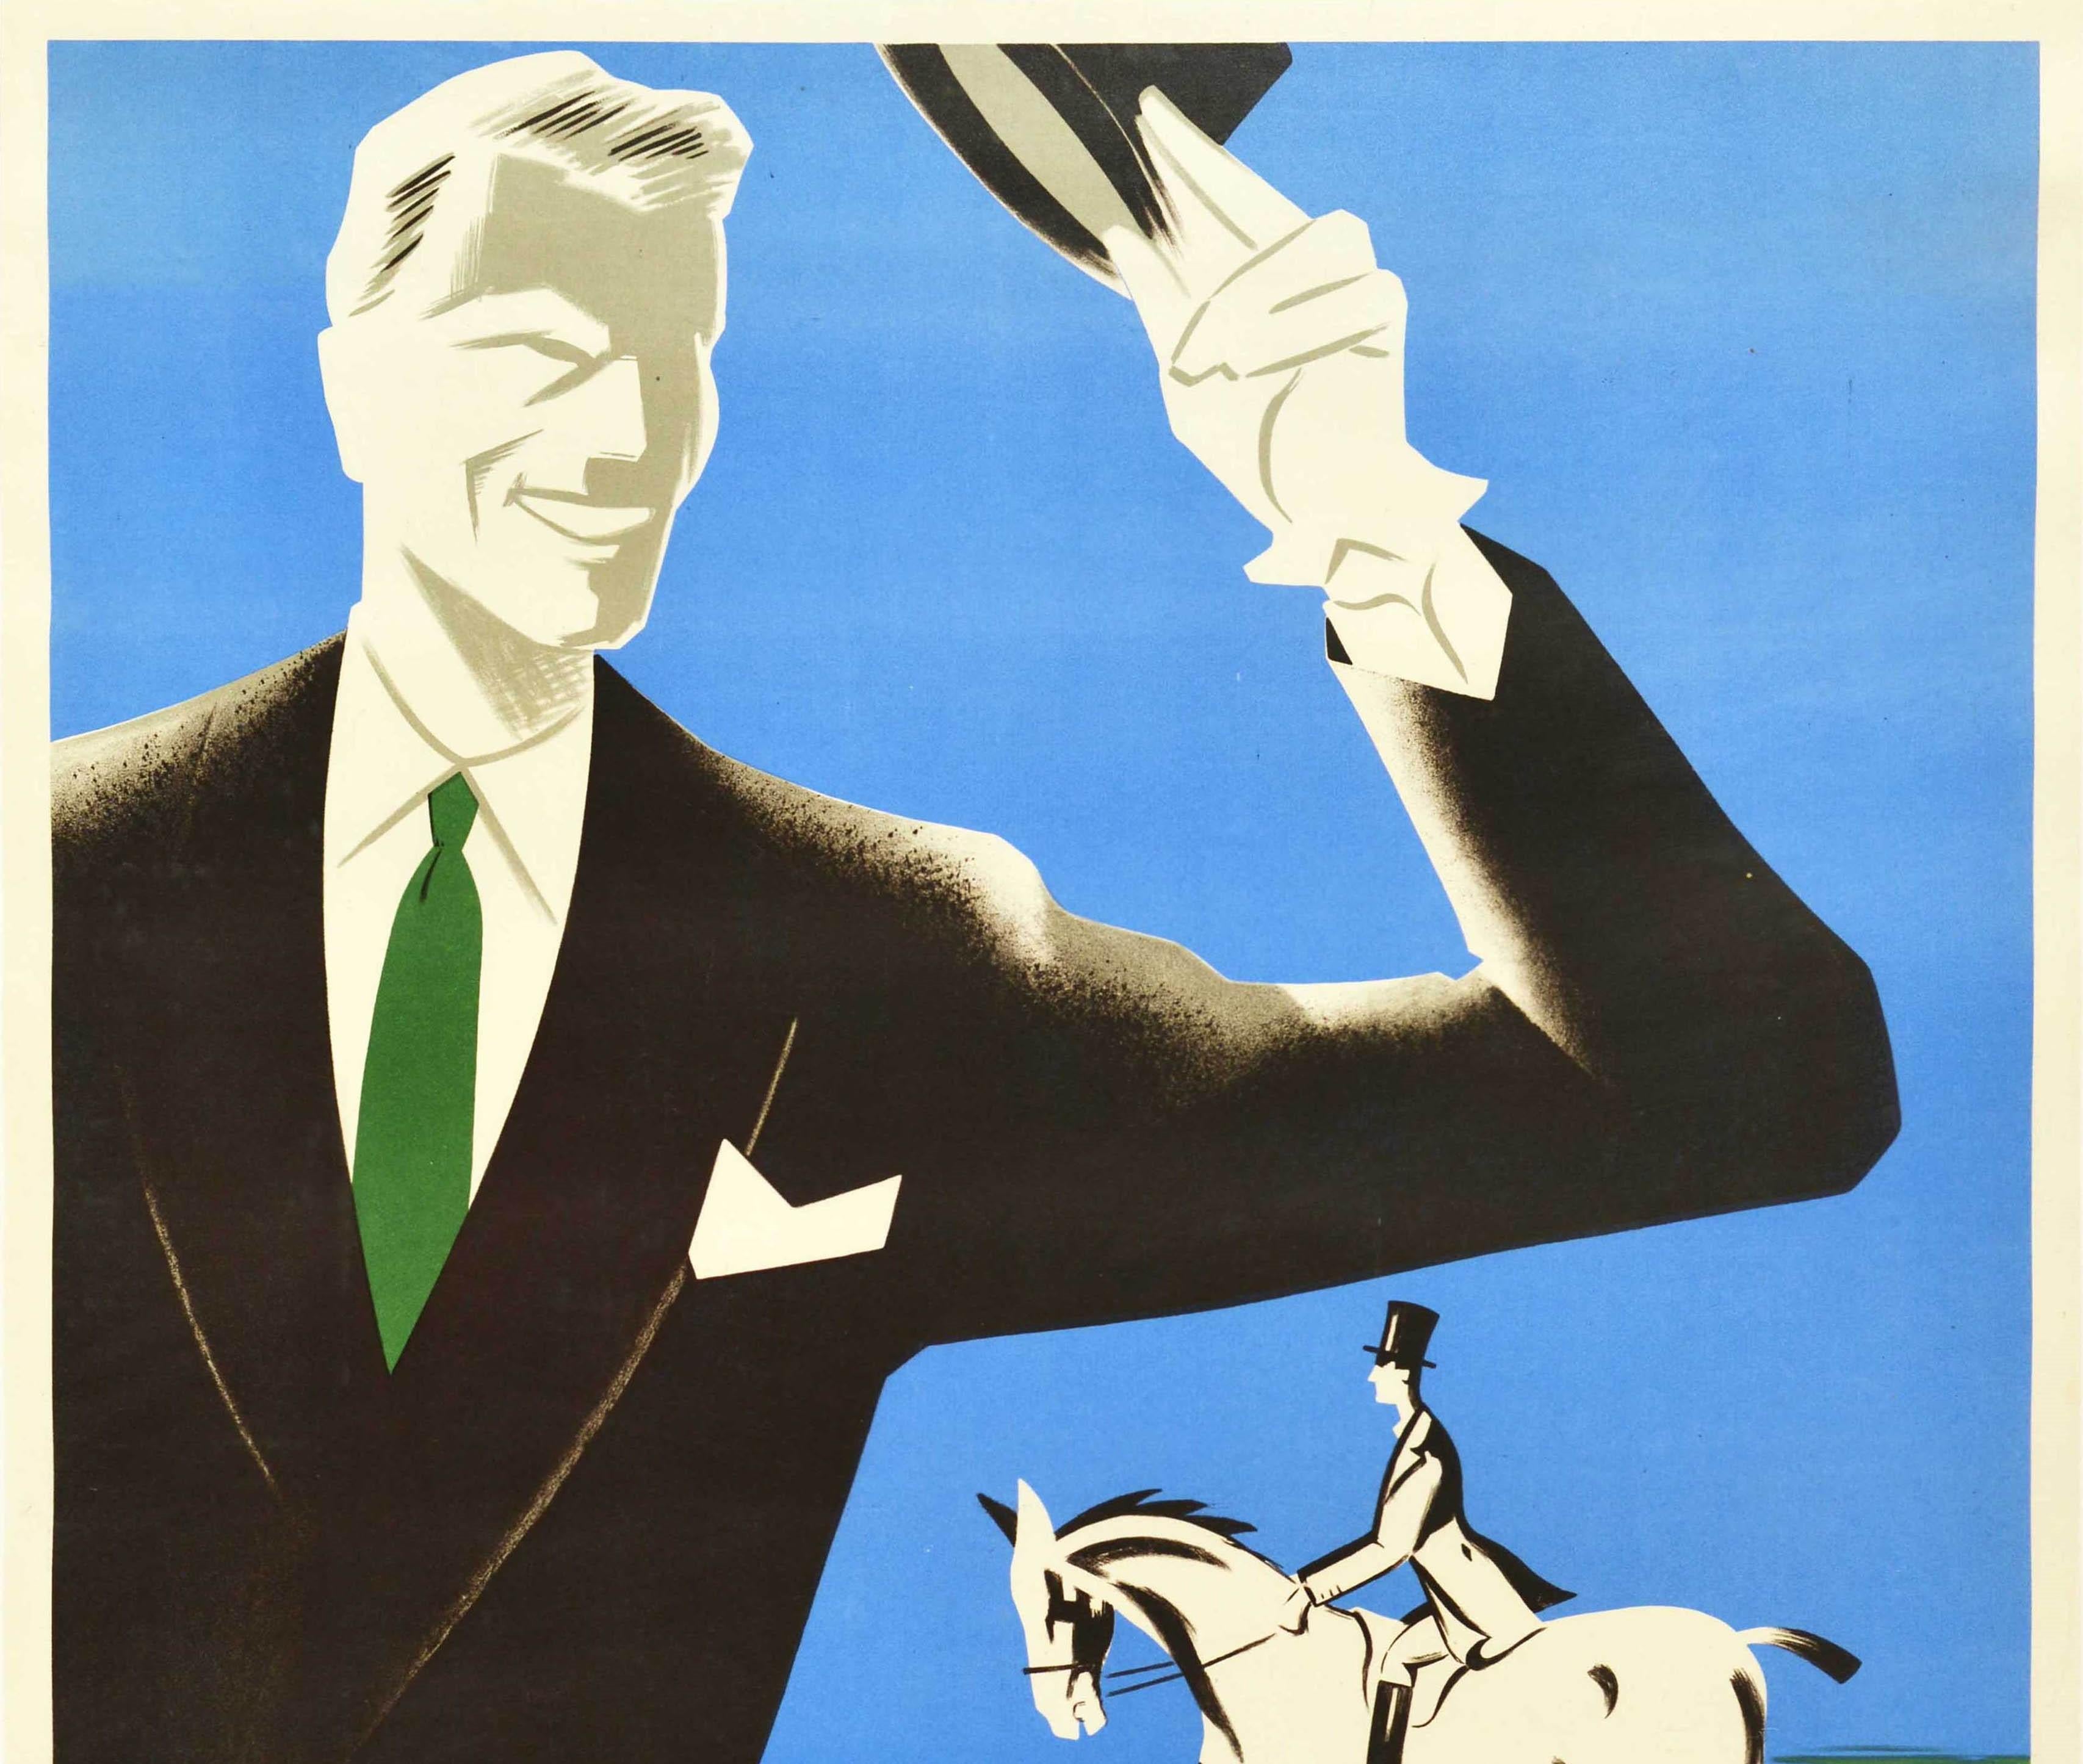 Original Vintage Men's Fashion Poster Un Homme Epsom Man Style Horse Race Design - Print by Unknown